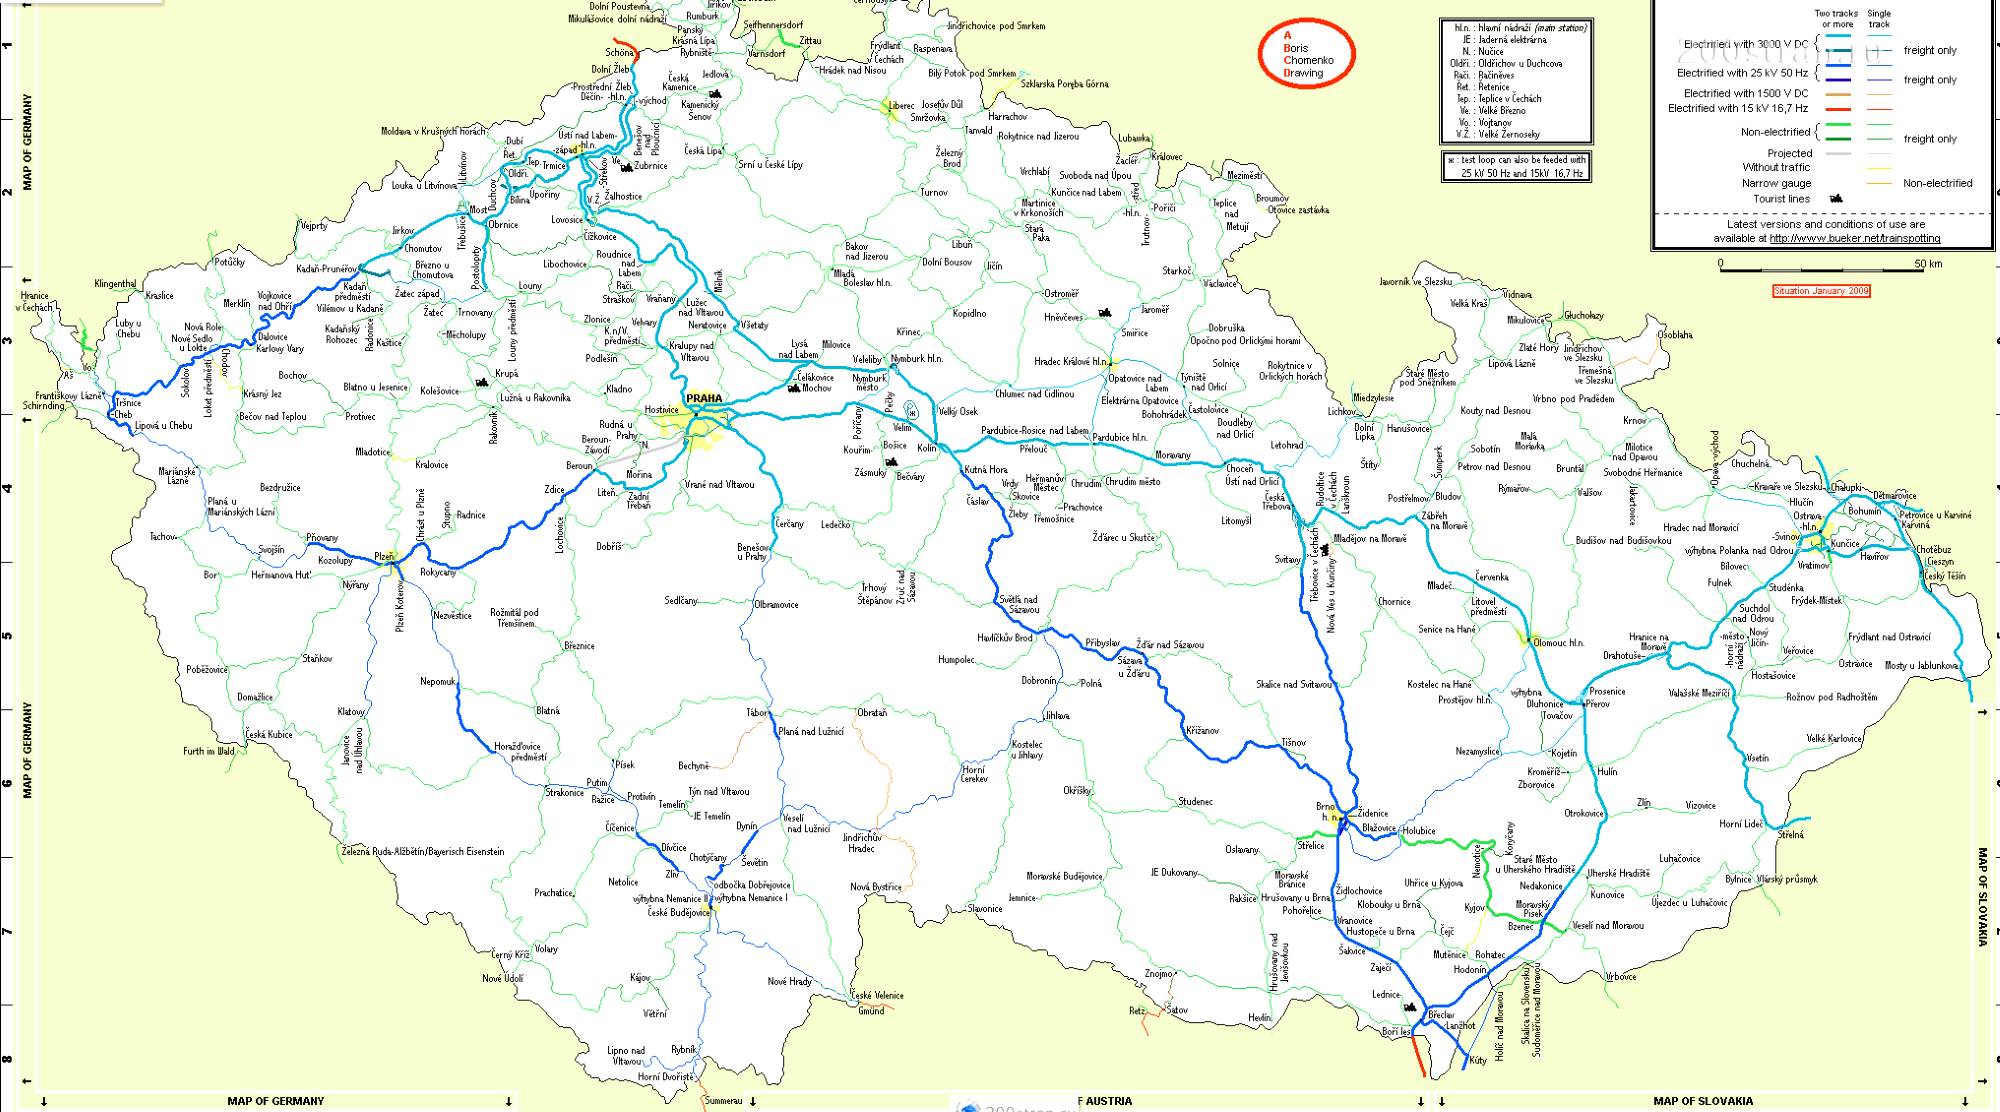 Map of Czech railroads